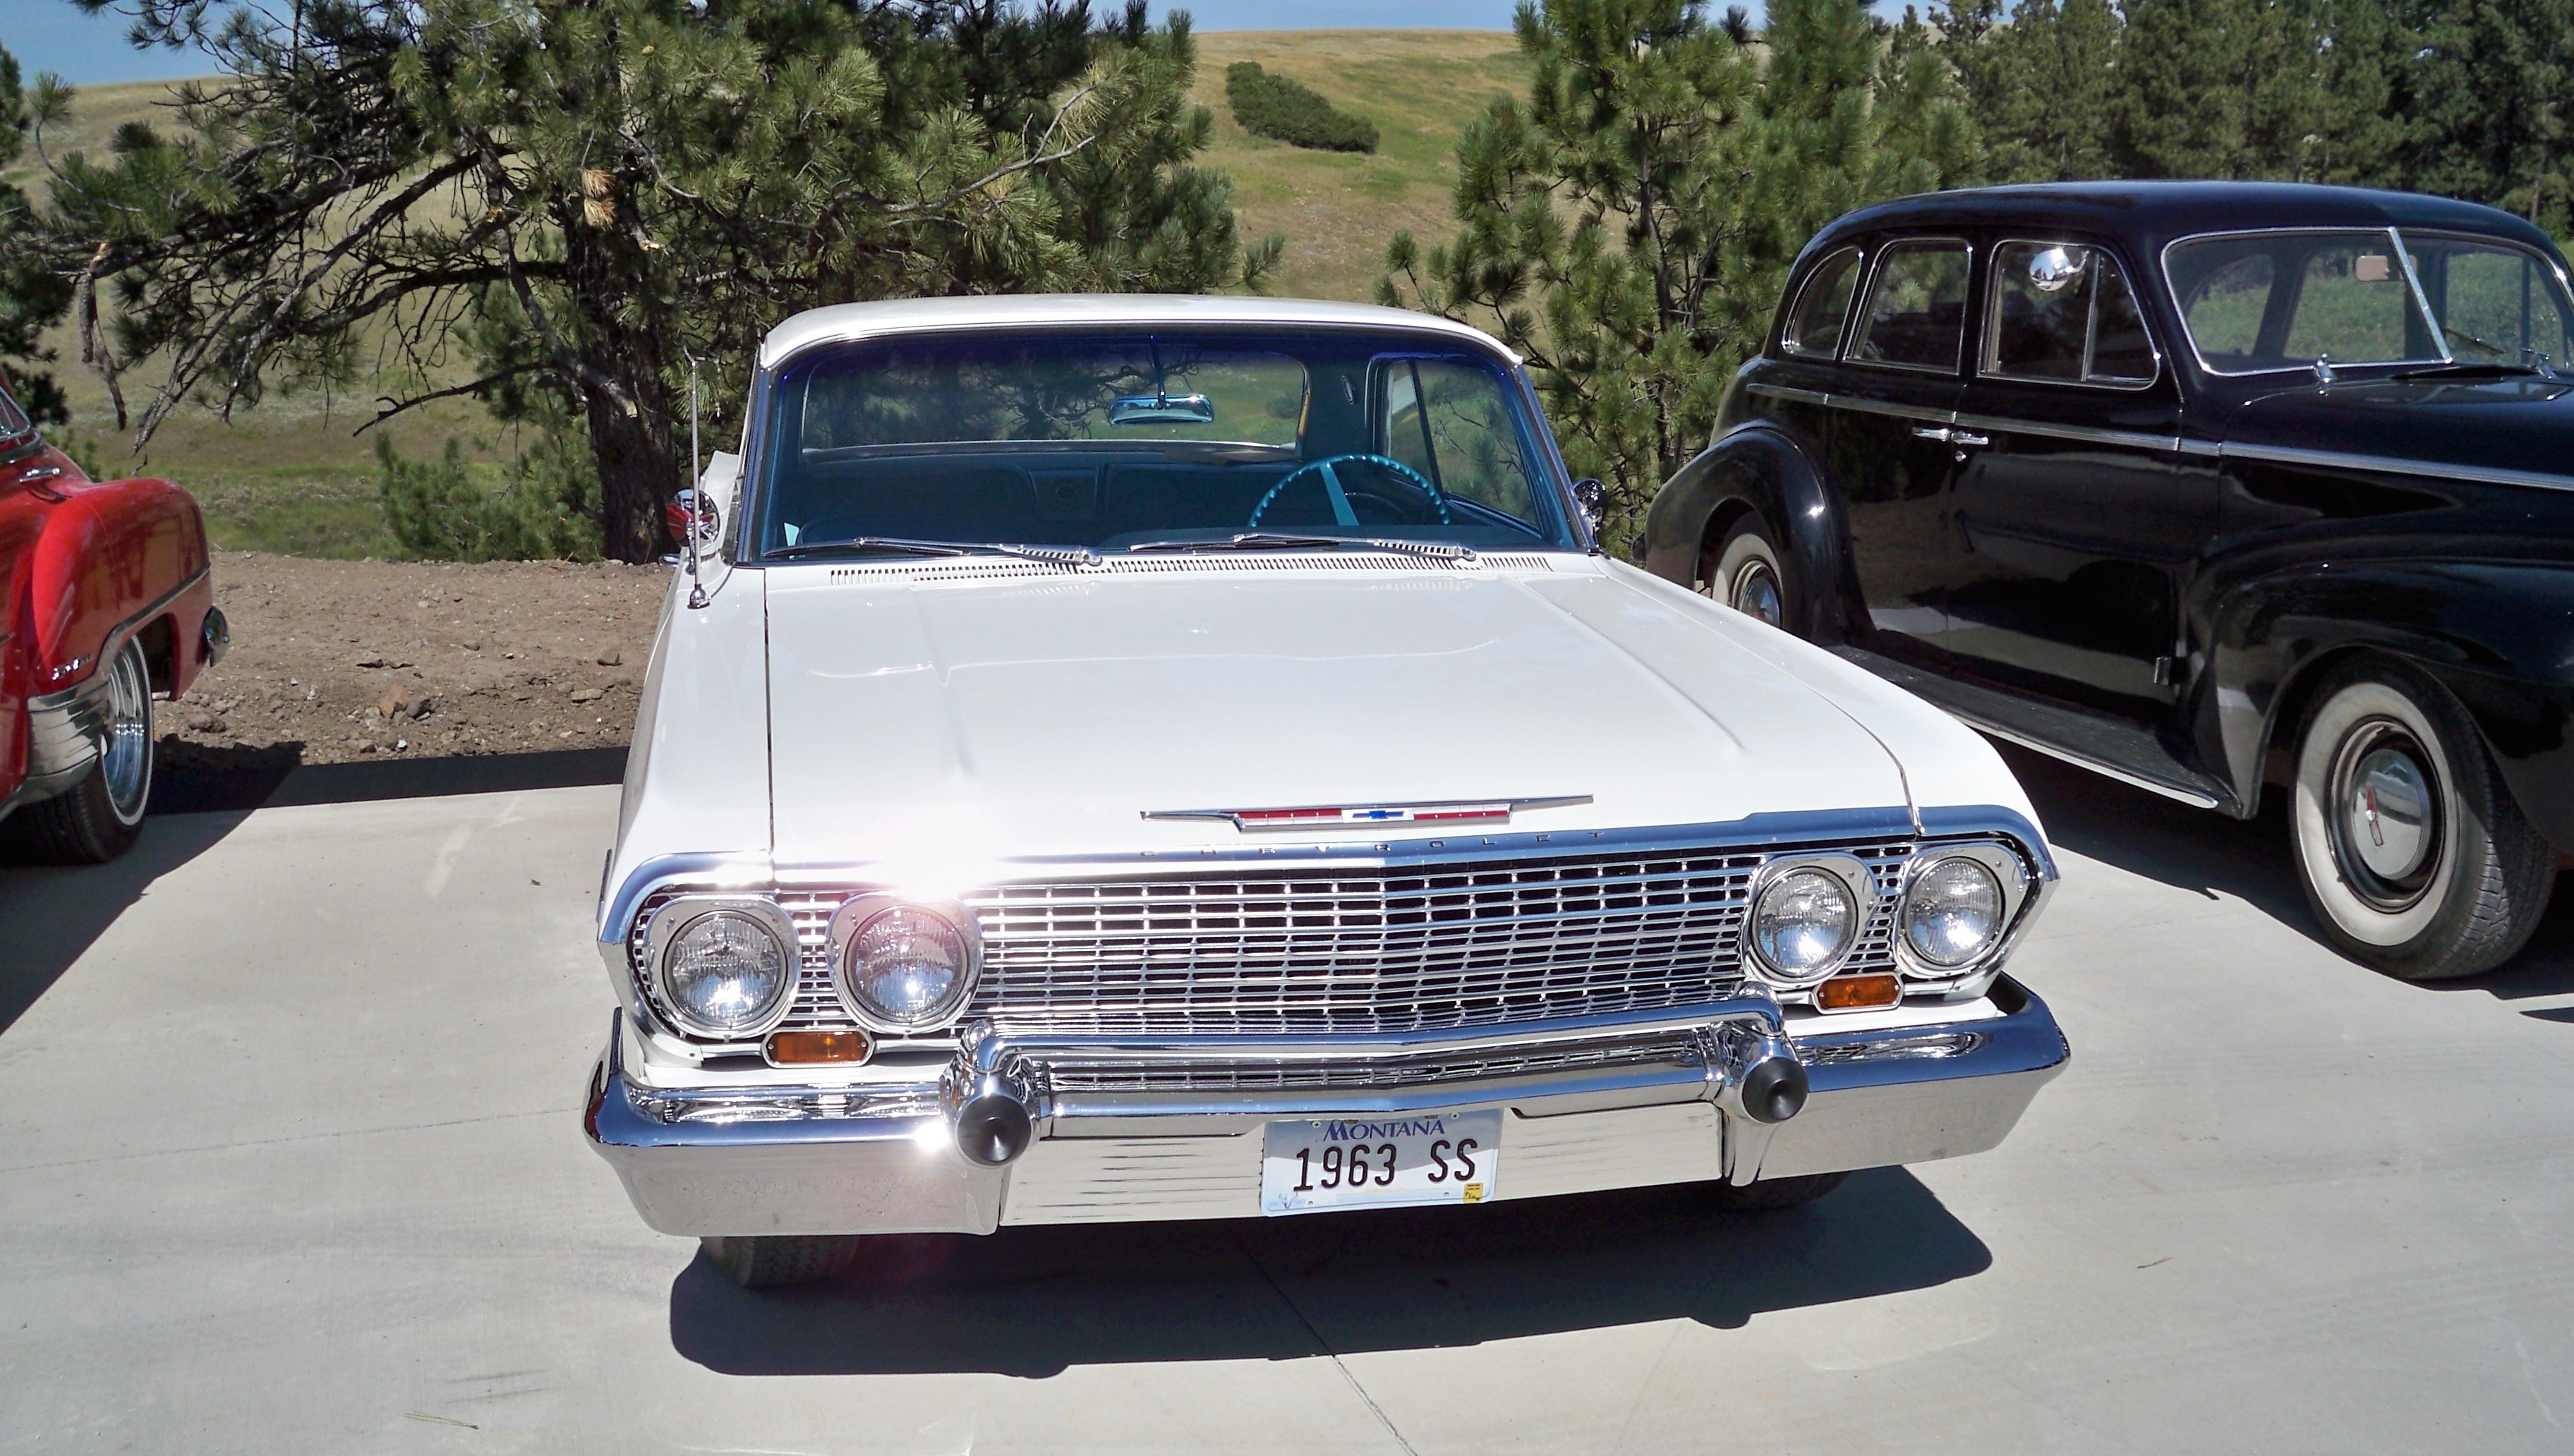 Free Images : old car, classic car, vintage car, automobiles, sedan ...